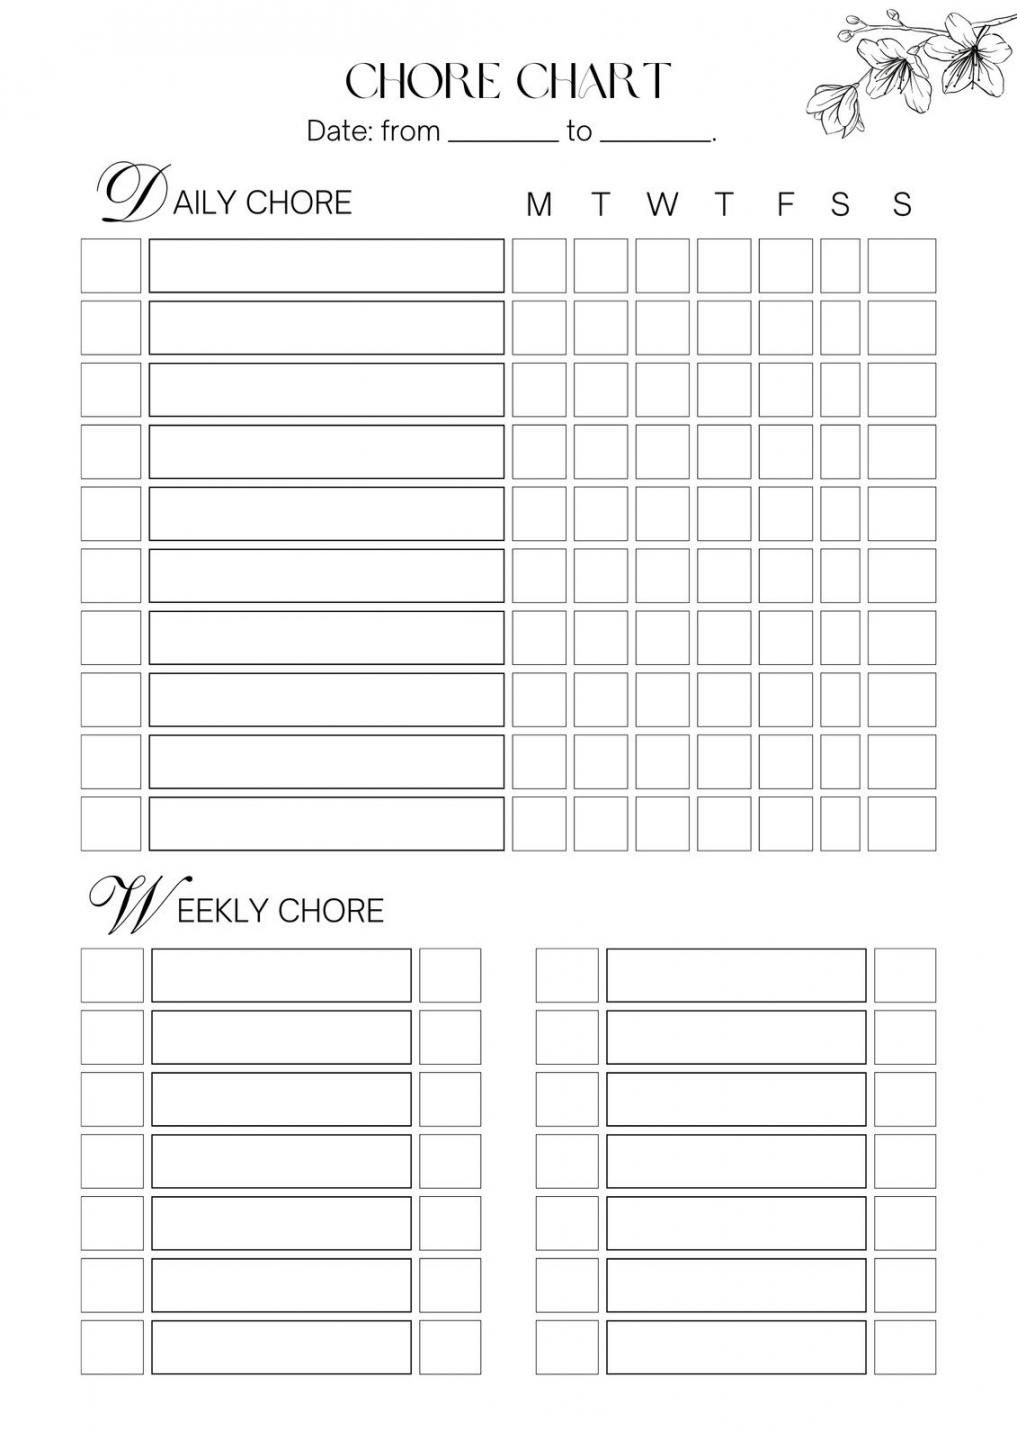 Free customizable chore chart templates to print  Canva - FREE Printables - Free Printable Weekly Chore Chart